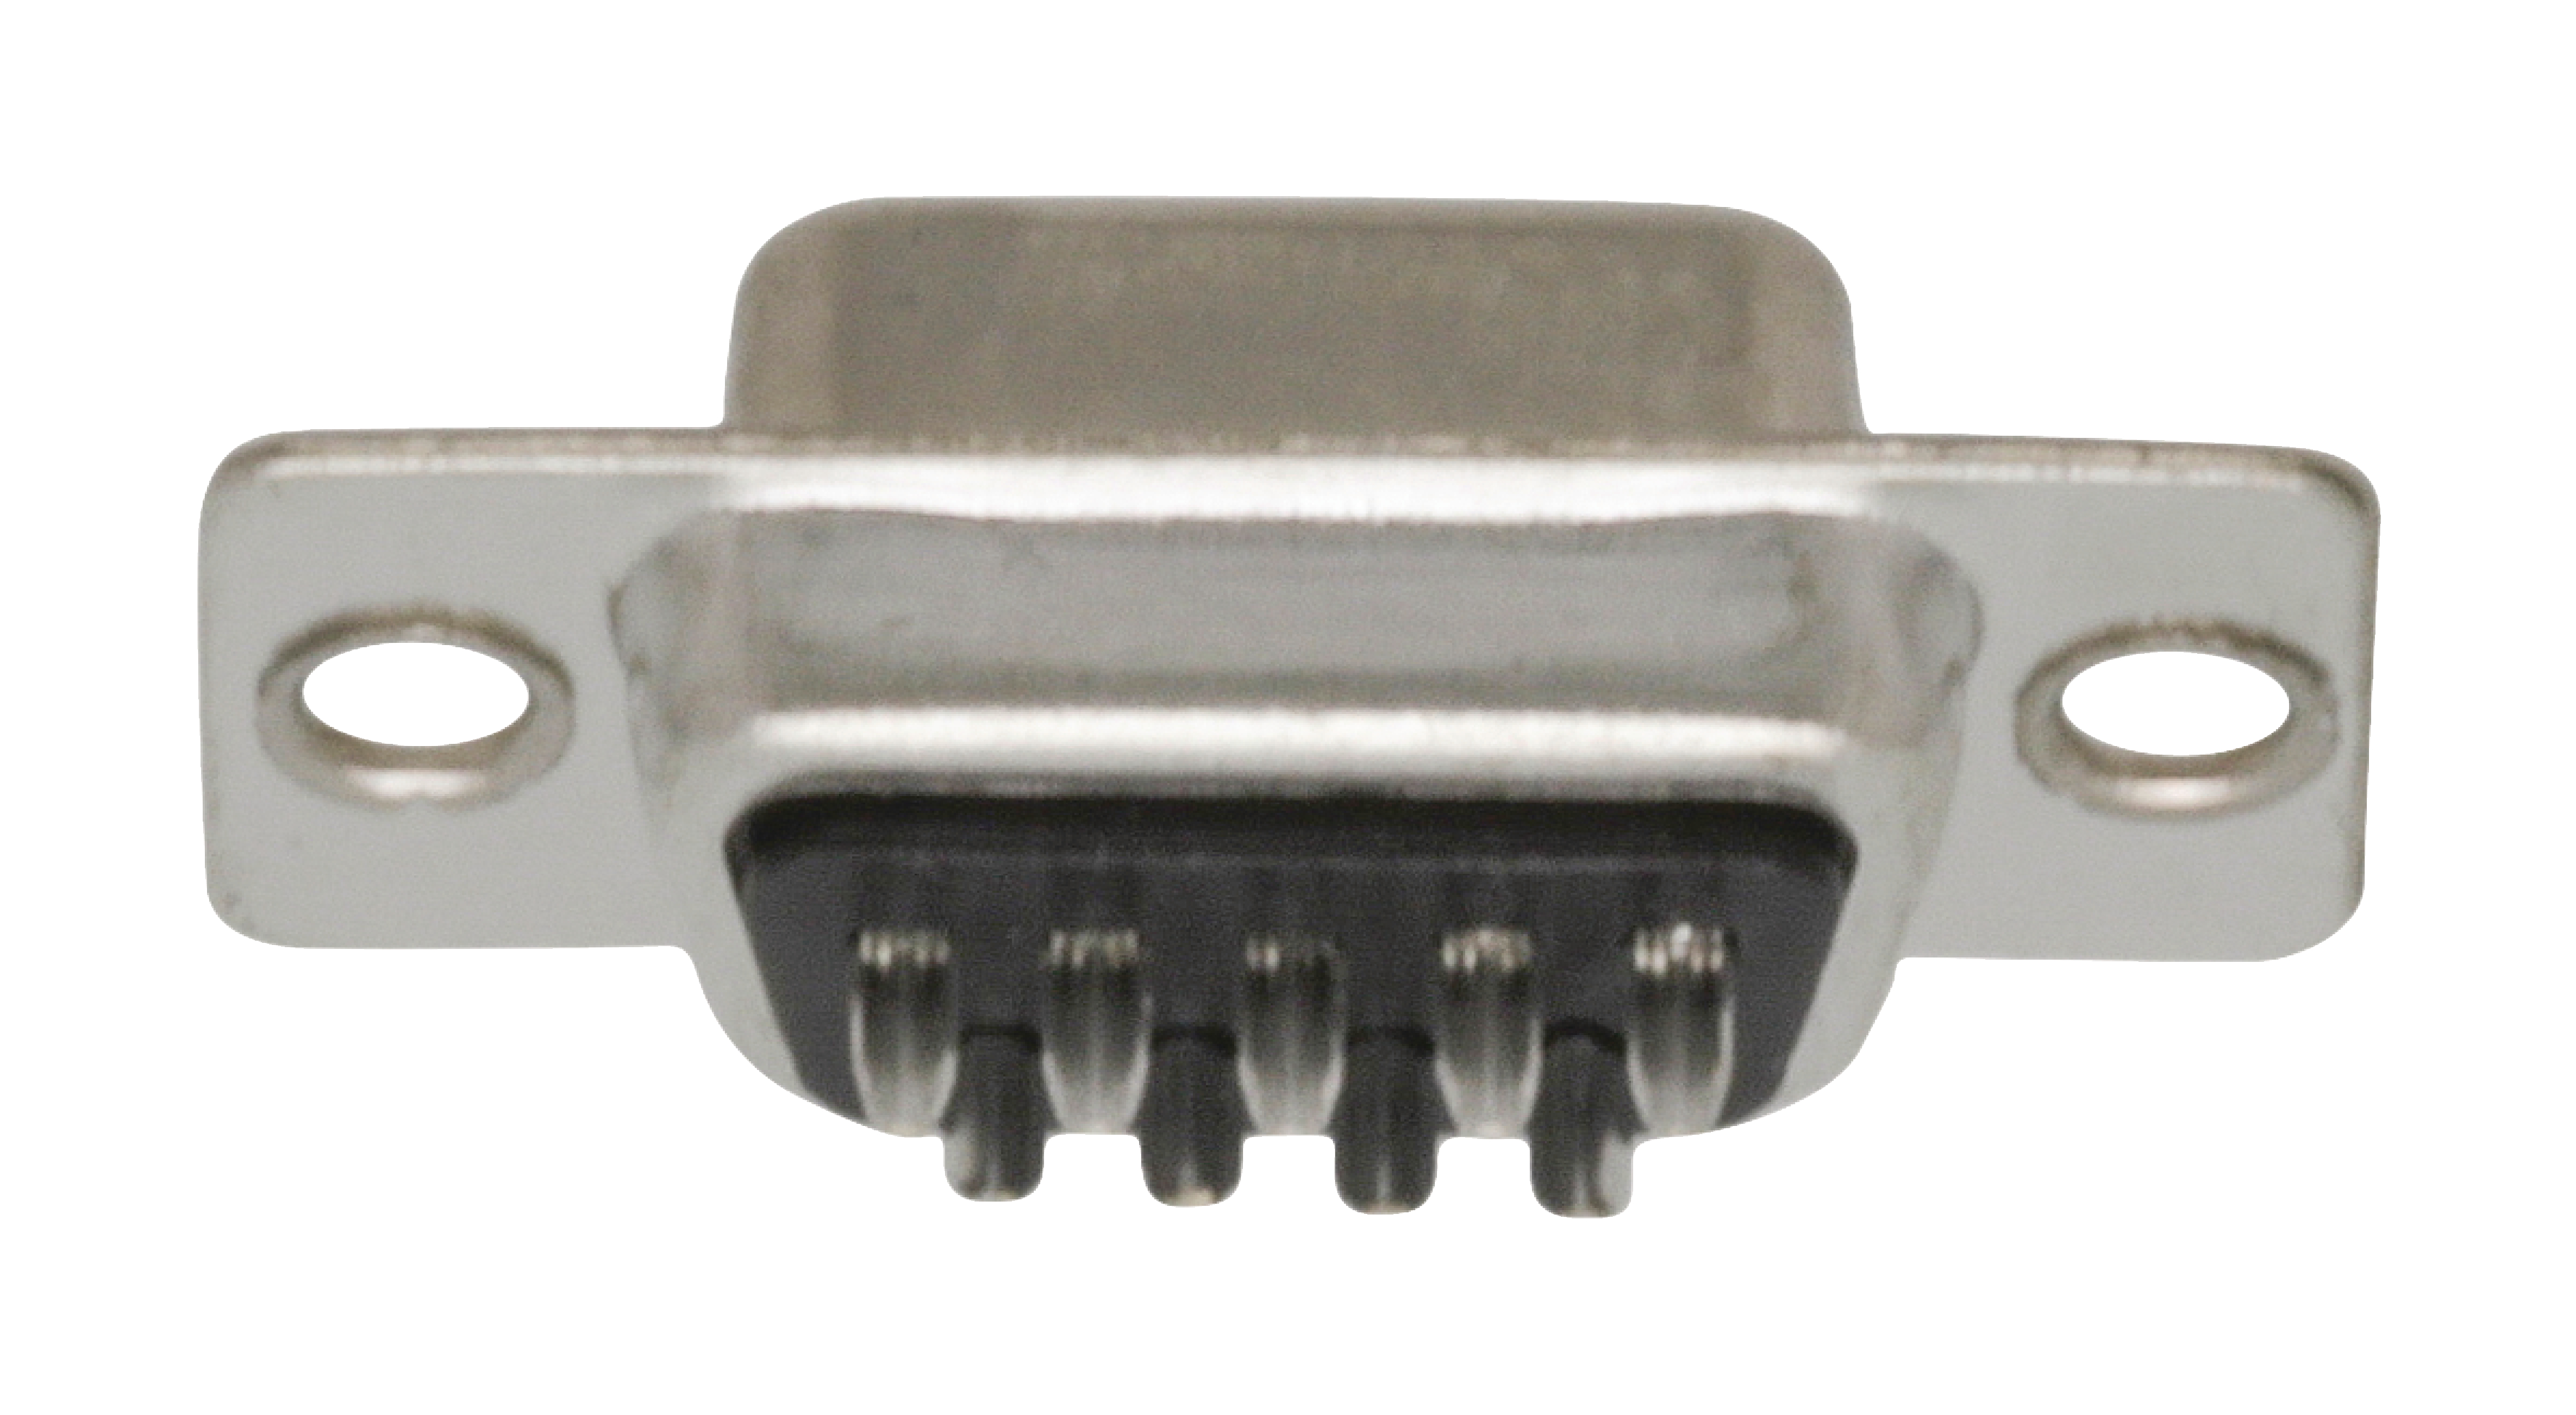 Connecteur sub-d femelle 9 broches - montage chassis